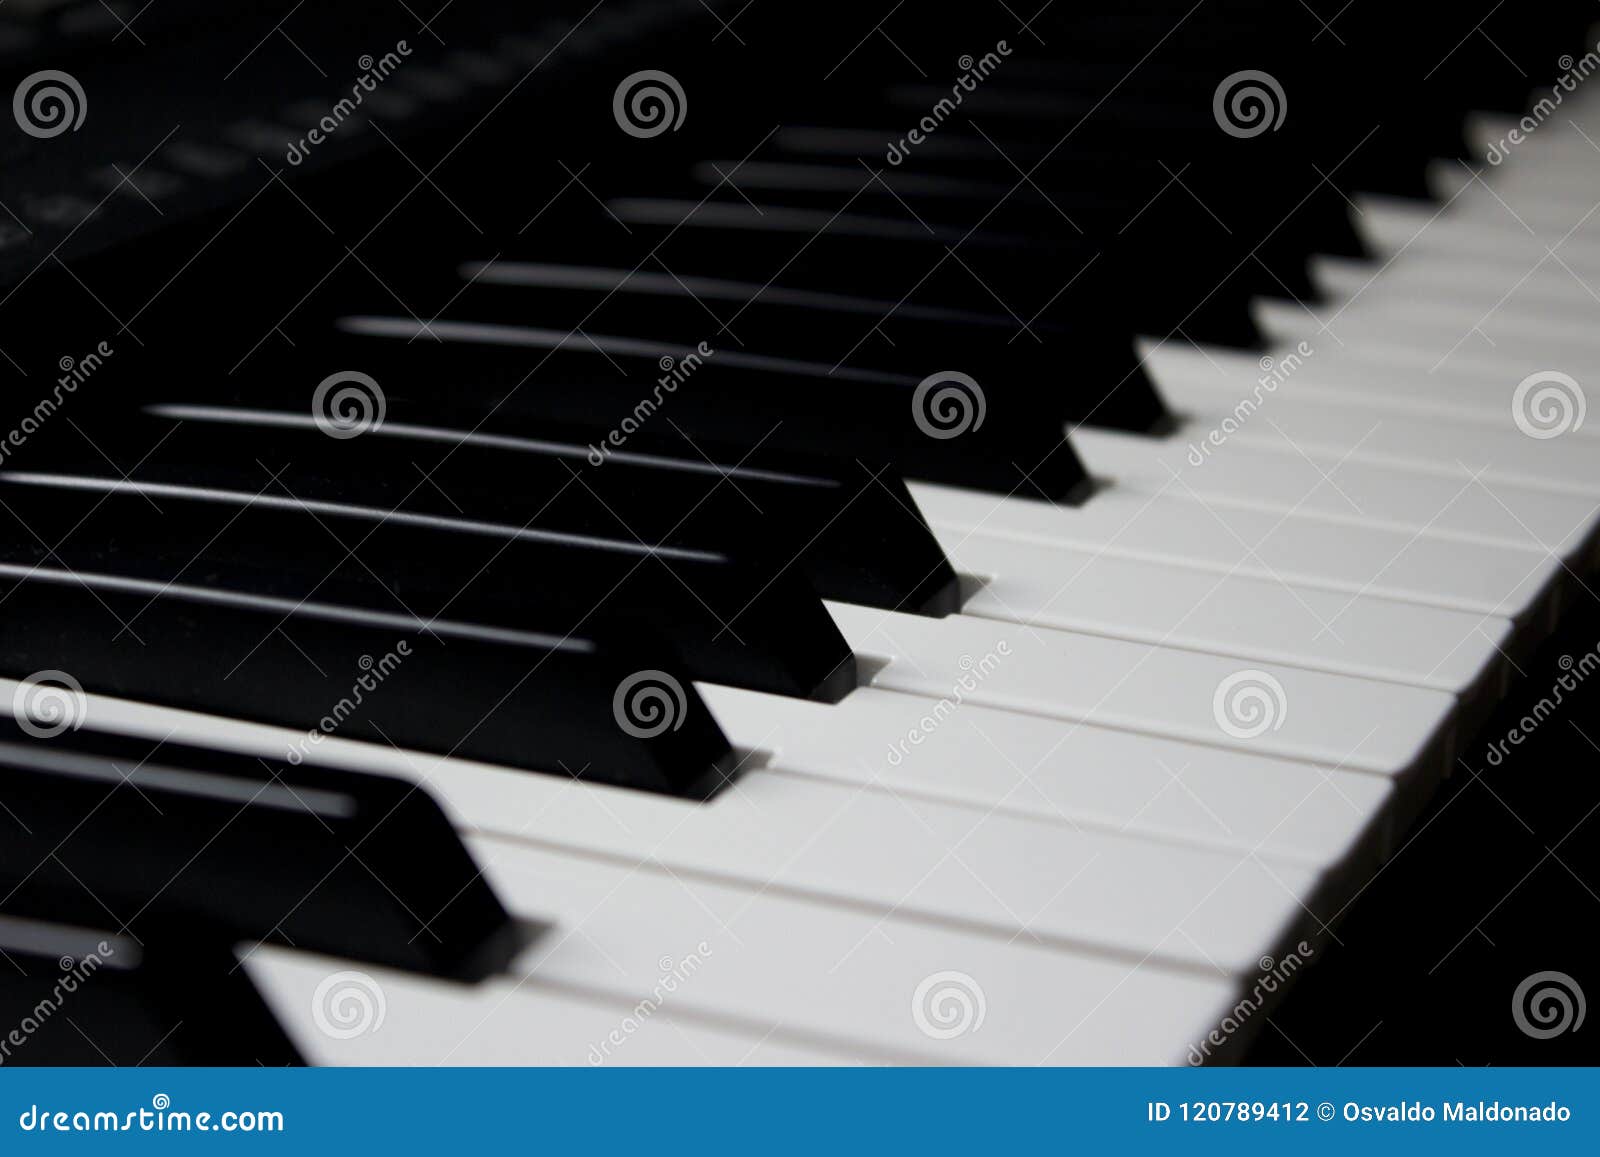 piano keys diagonal shot